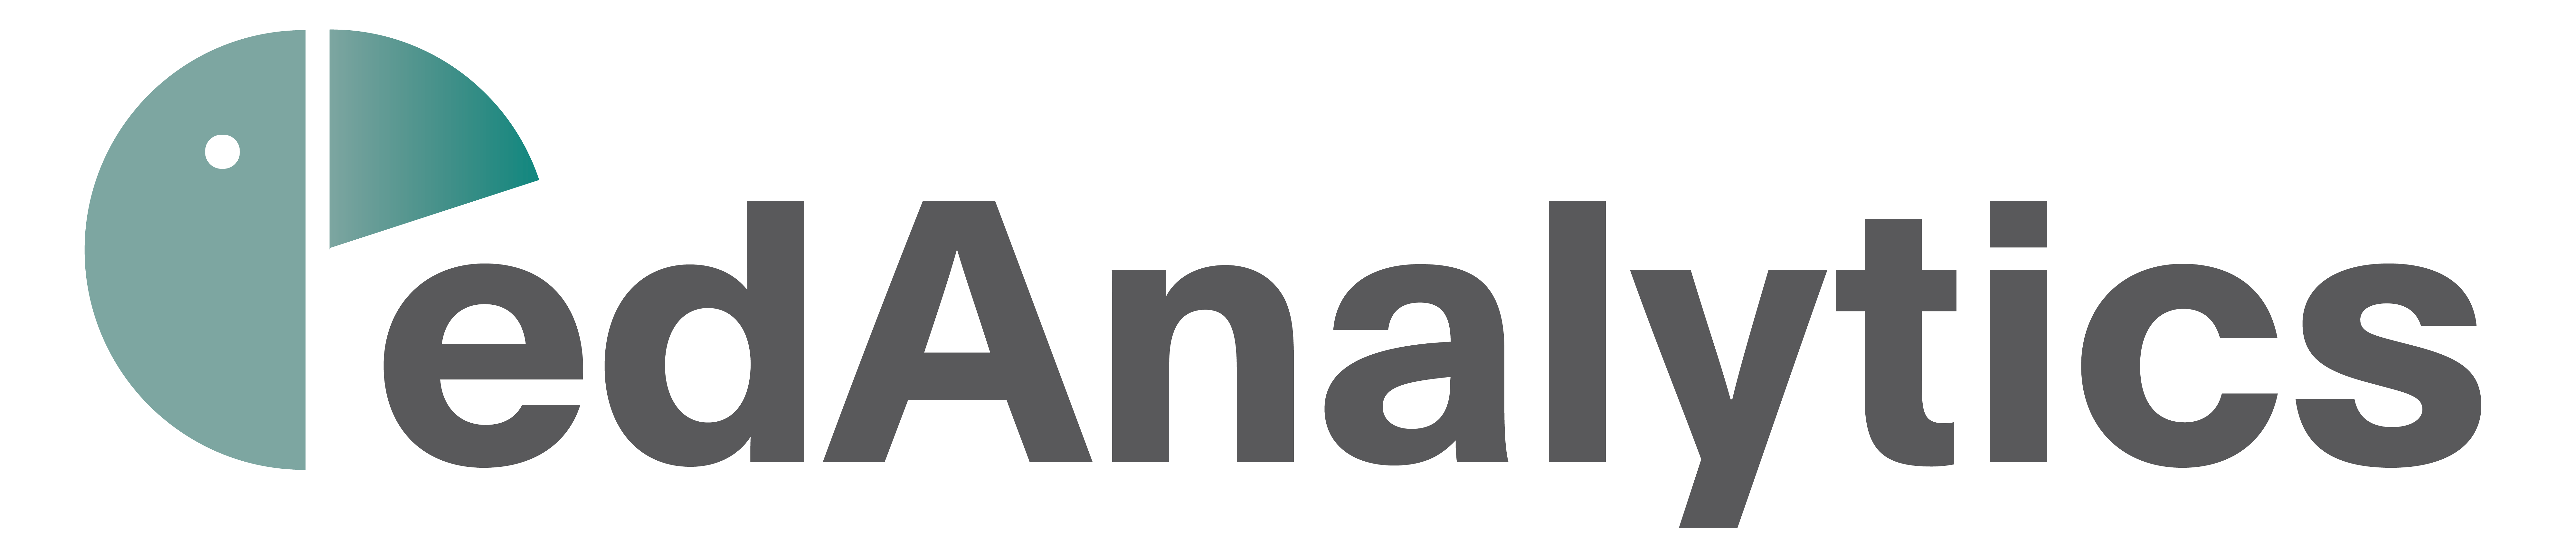 edanalytics_logo